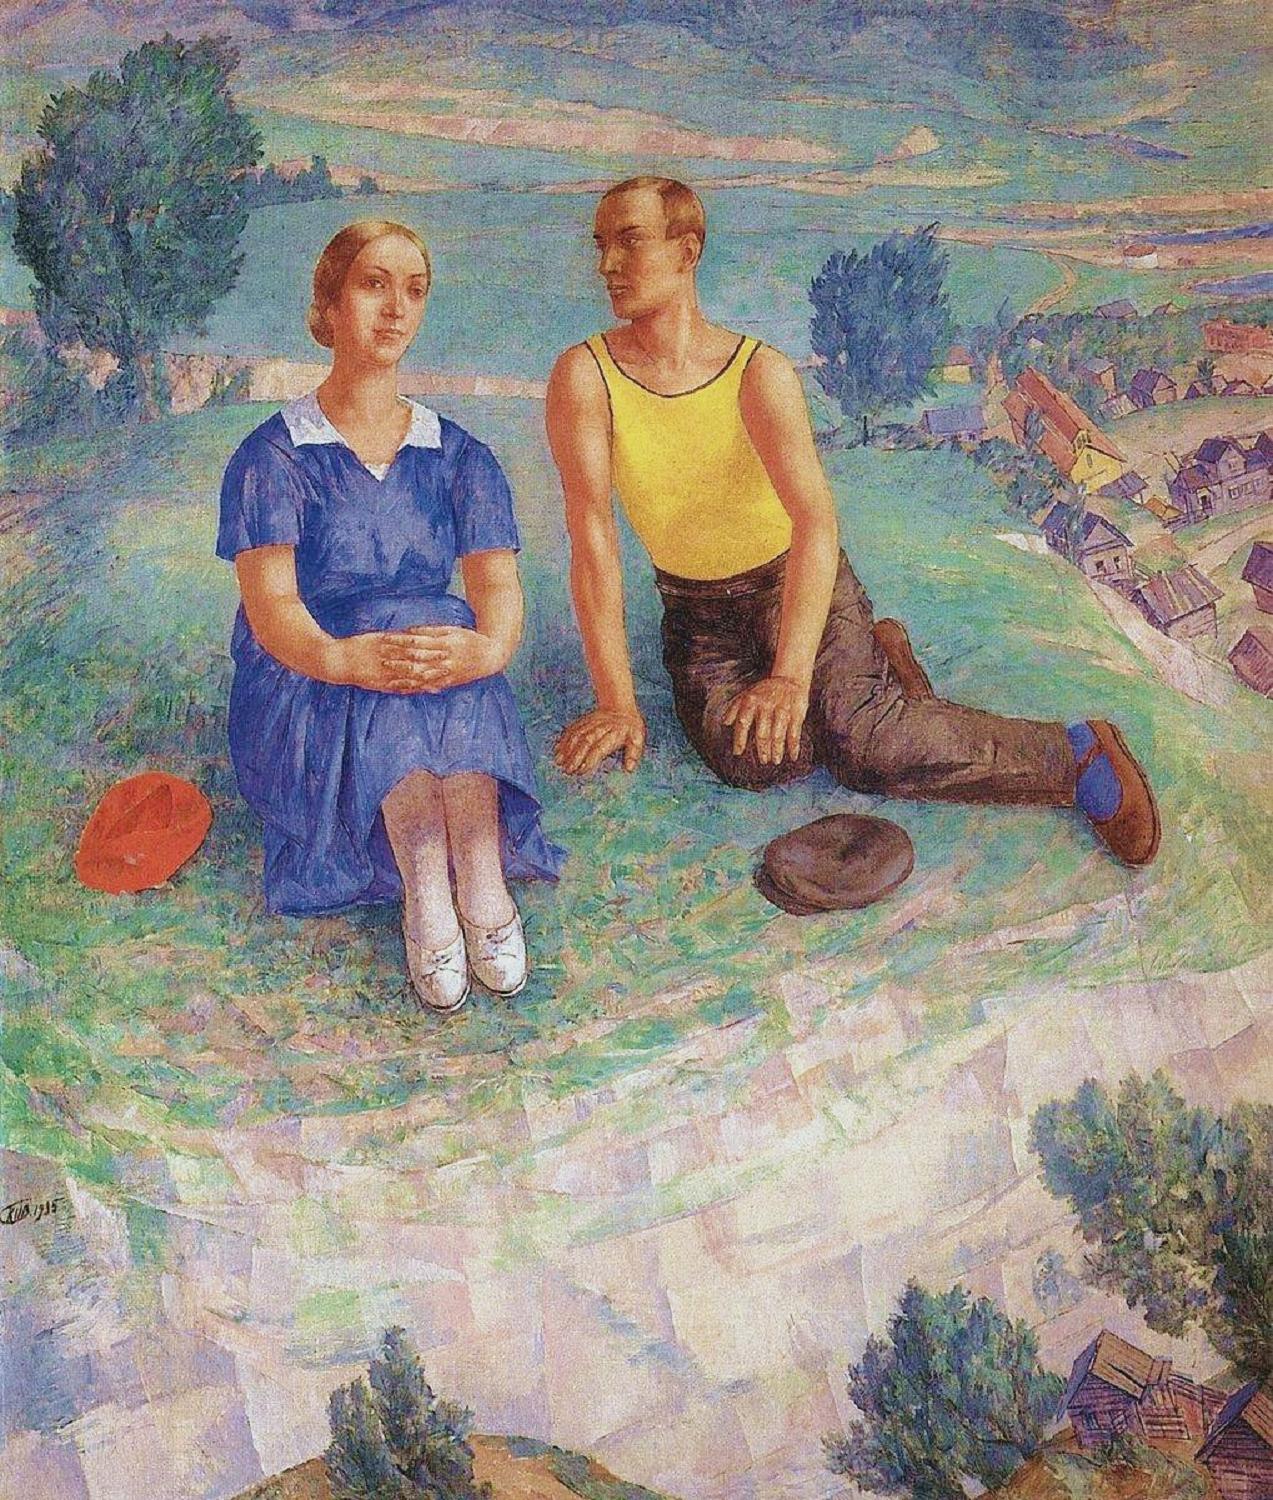 Spring by Kuzma Petrov-Vodkin, 1935